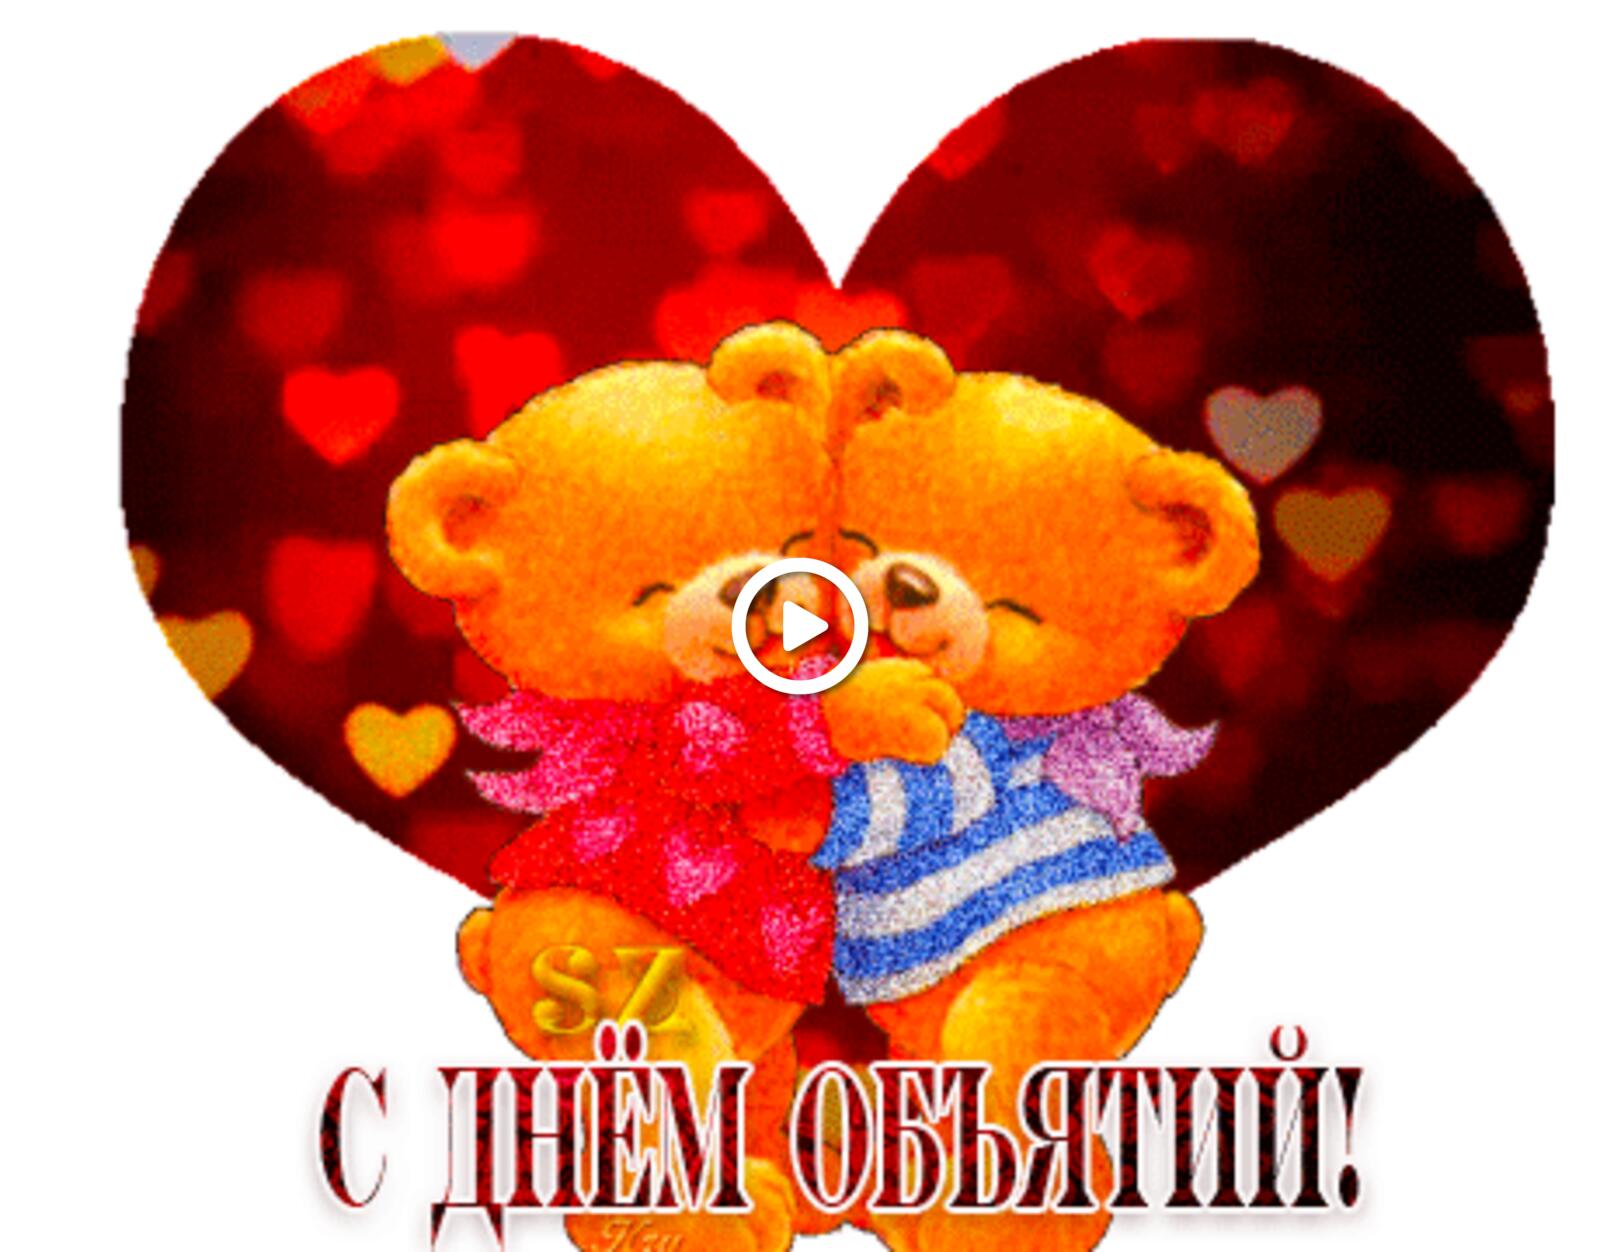 A postcard on the subject of hug bears heart for free